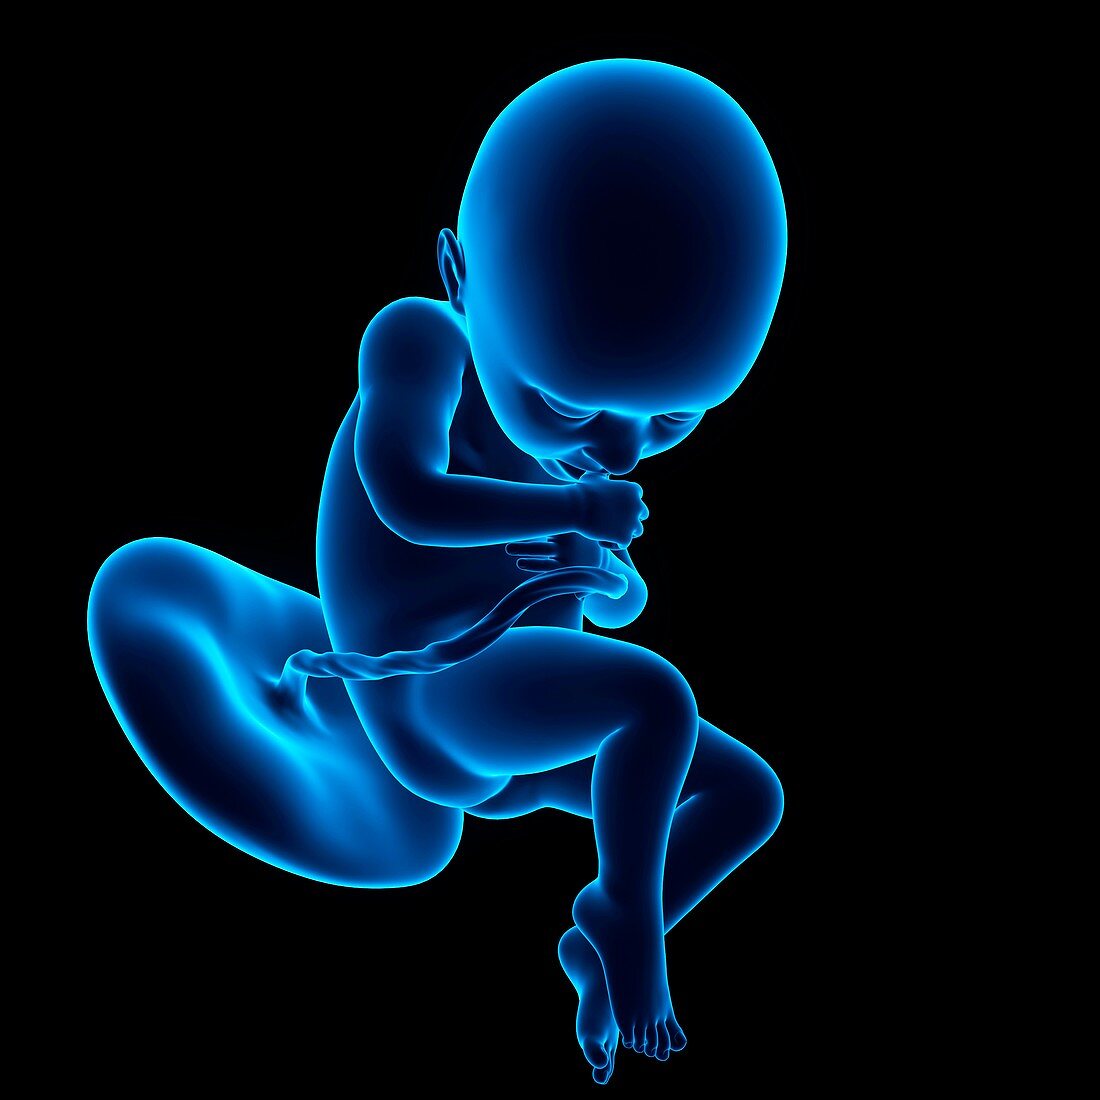 Human fetus age 36 weeks